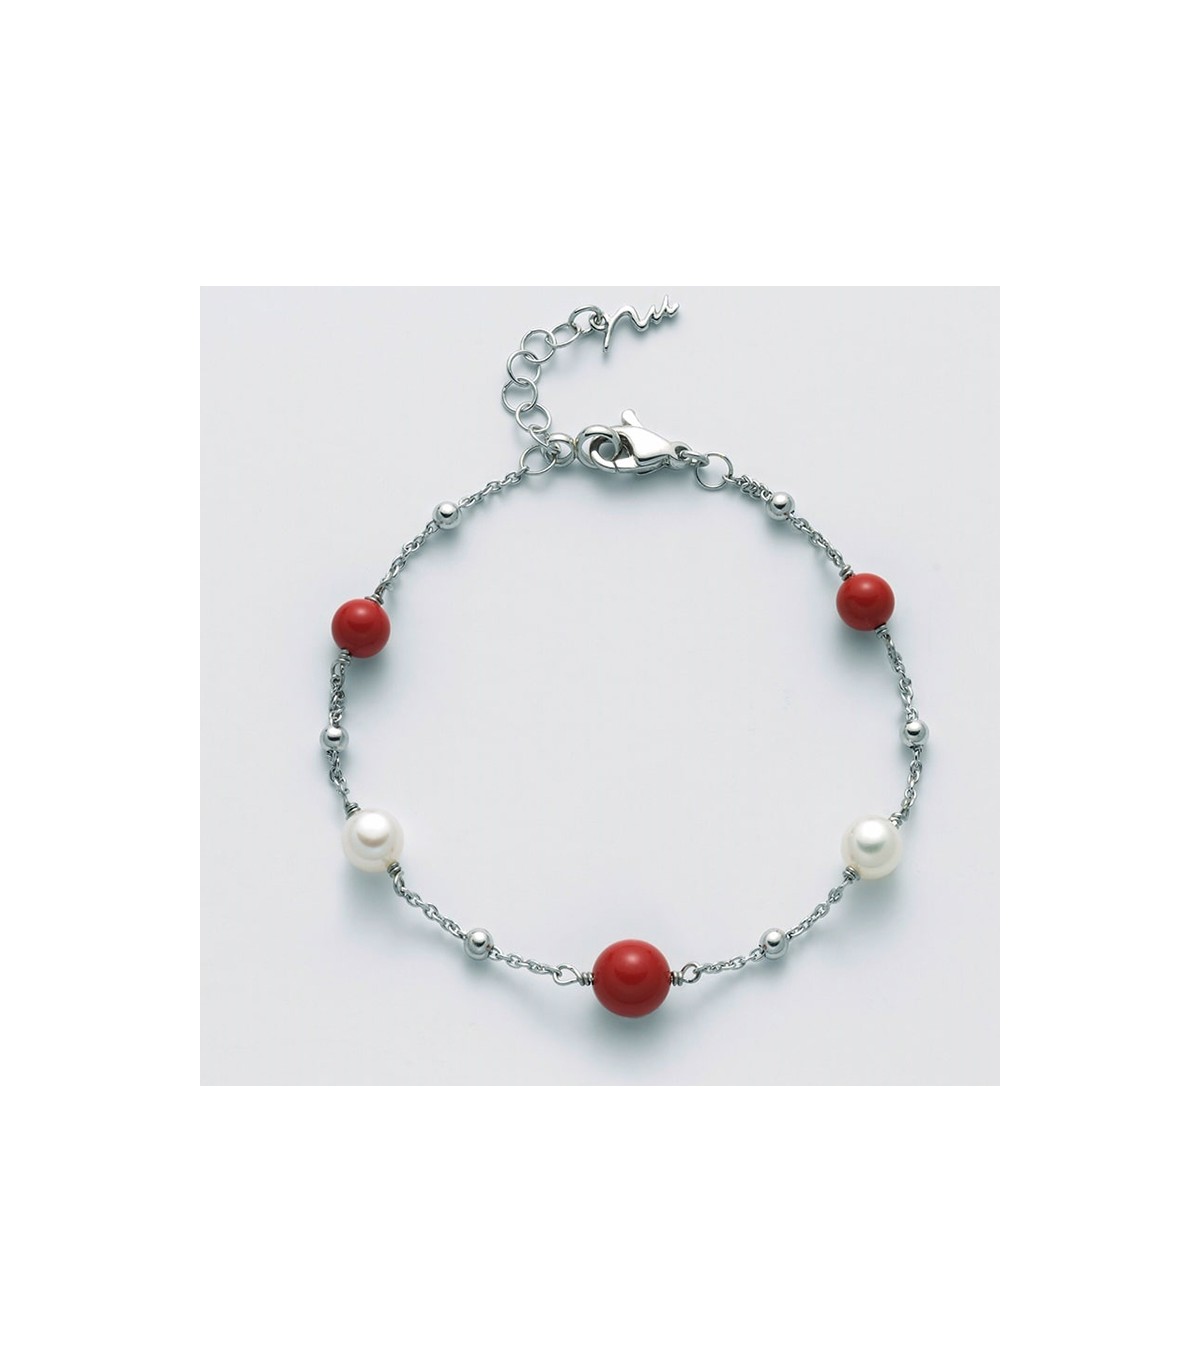 Coral silver bracelet natural coral ston bracelet Moonga bracelet